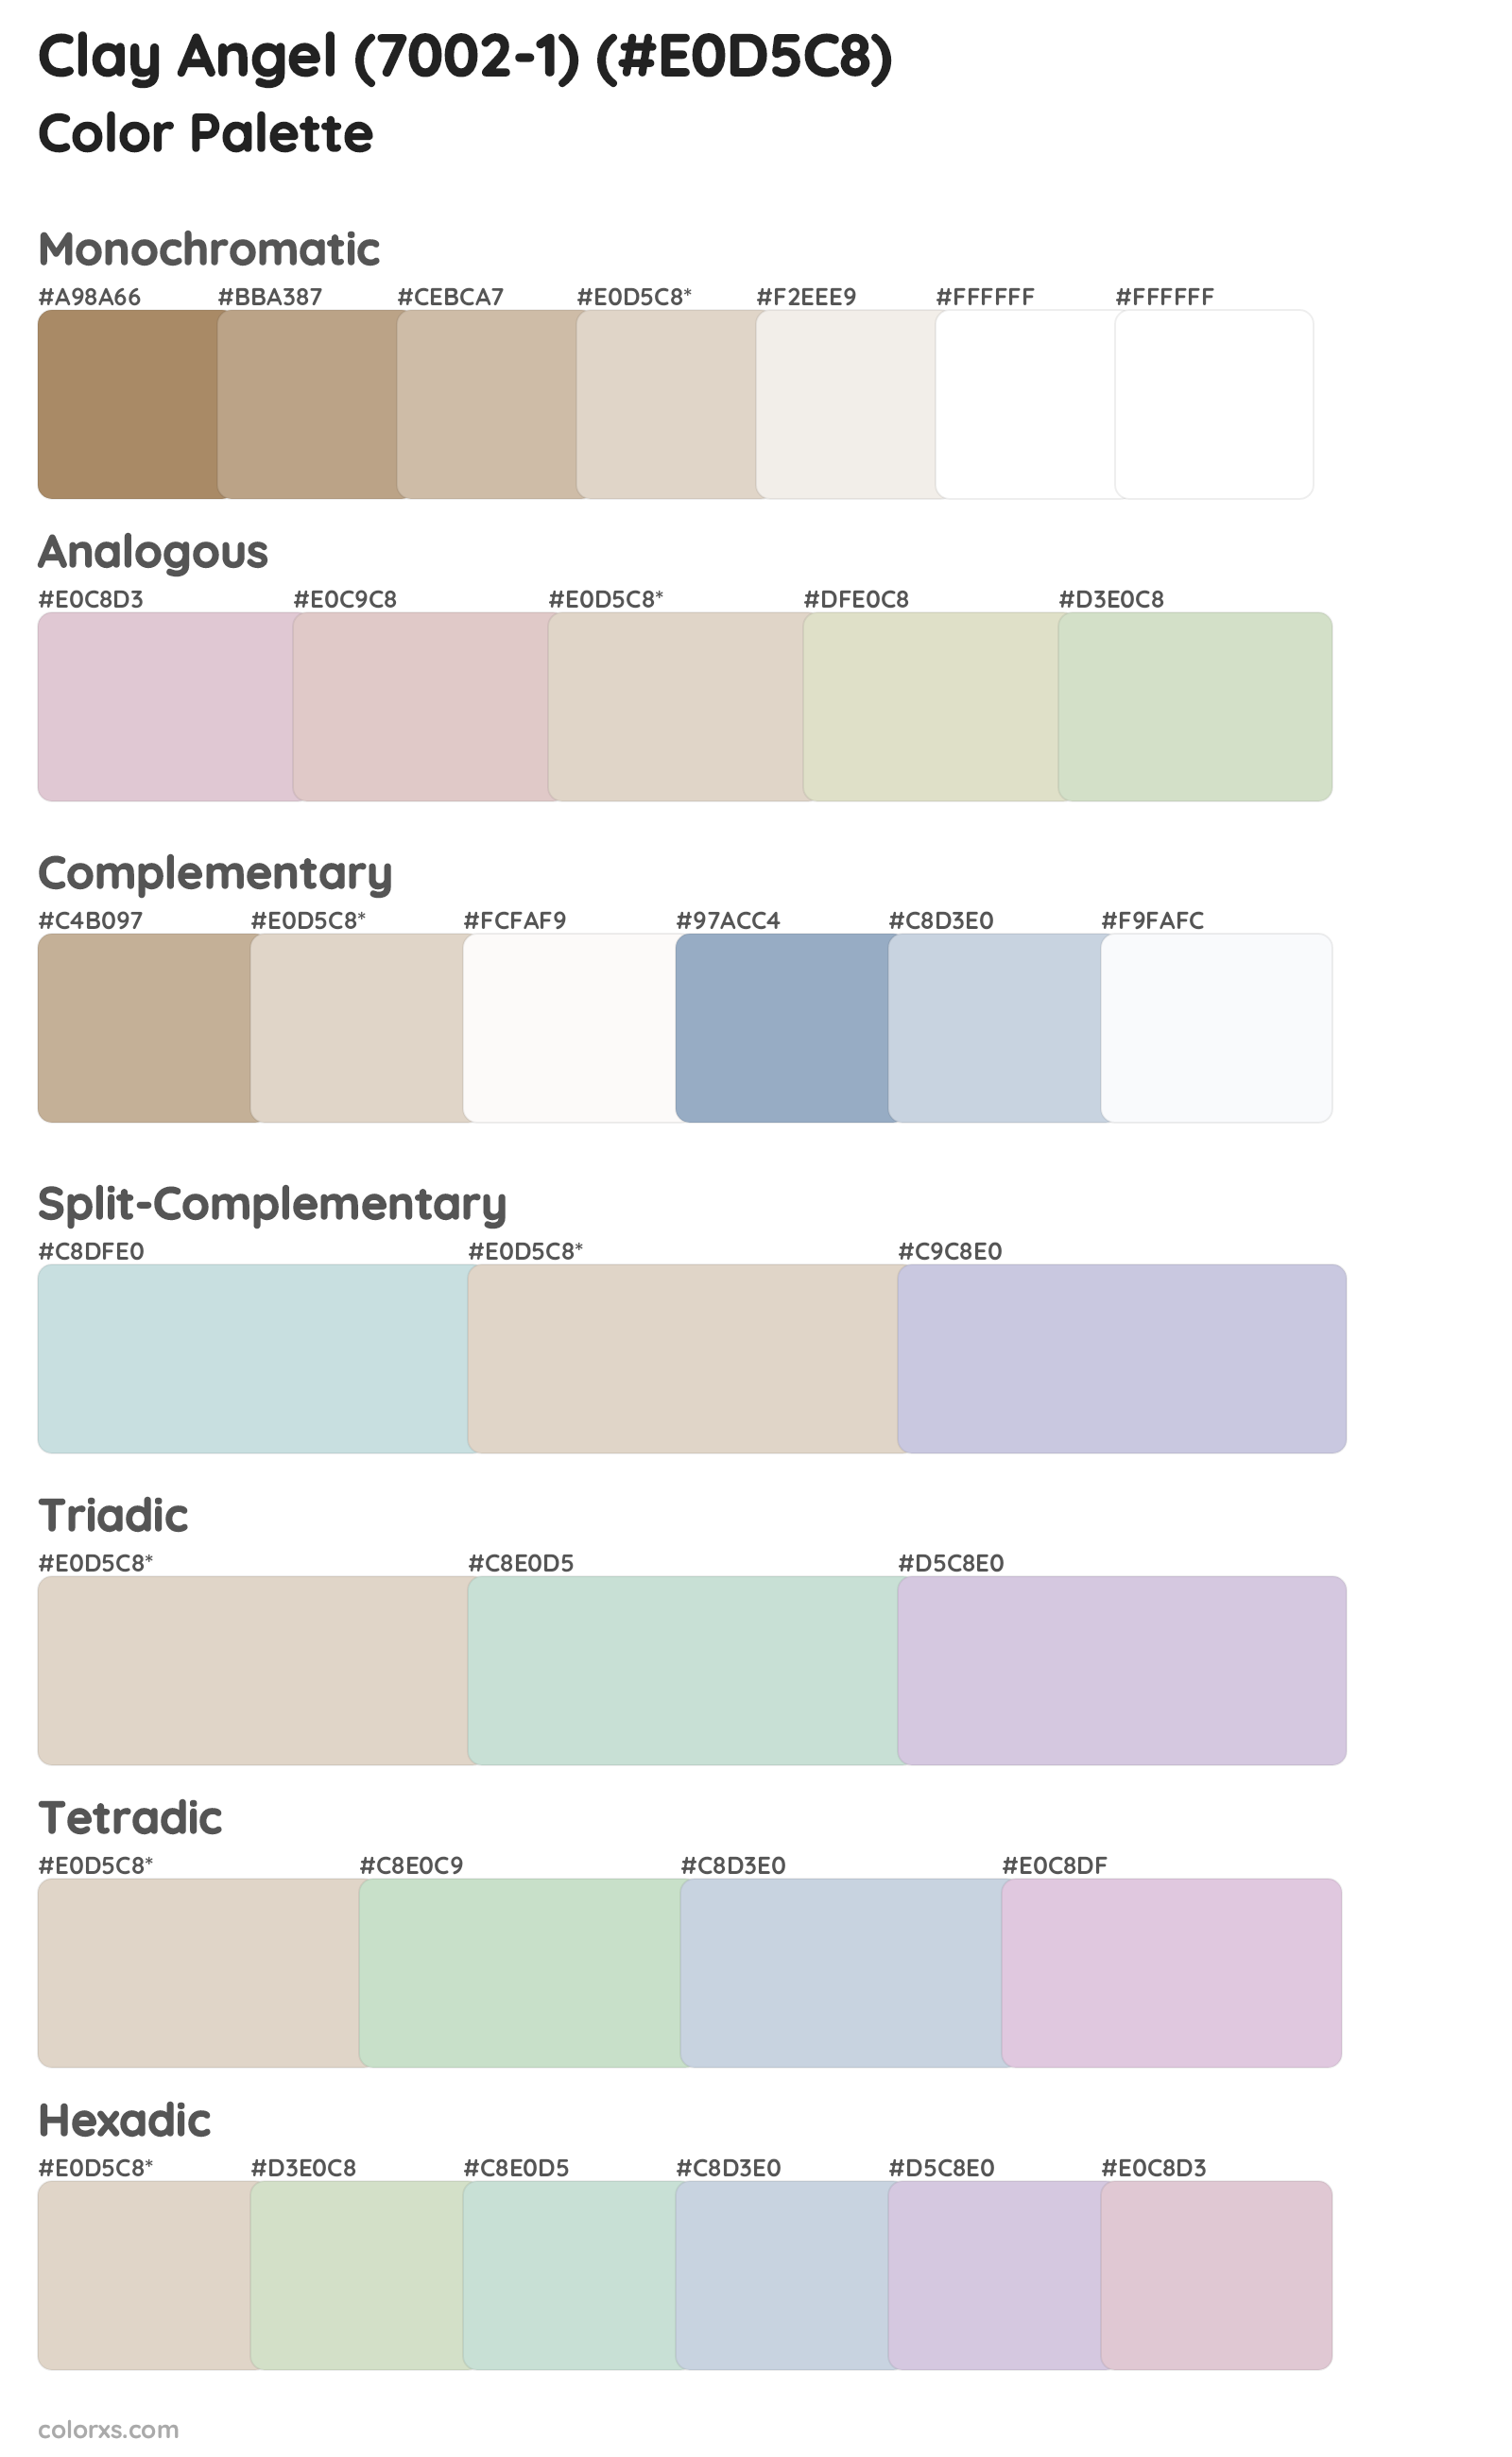 Clay Angel (7002-1) Color Scheme Palettes